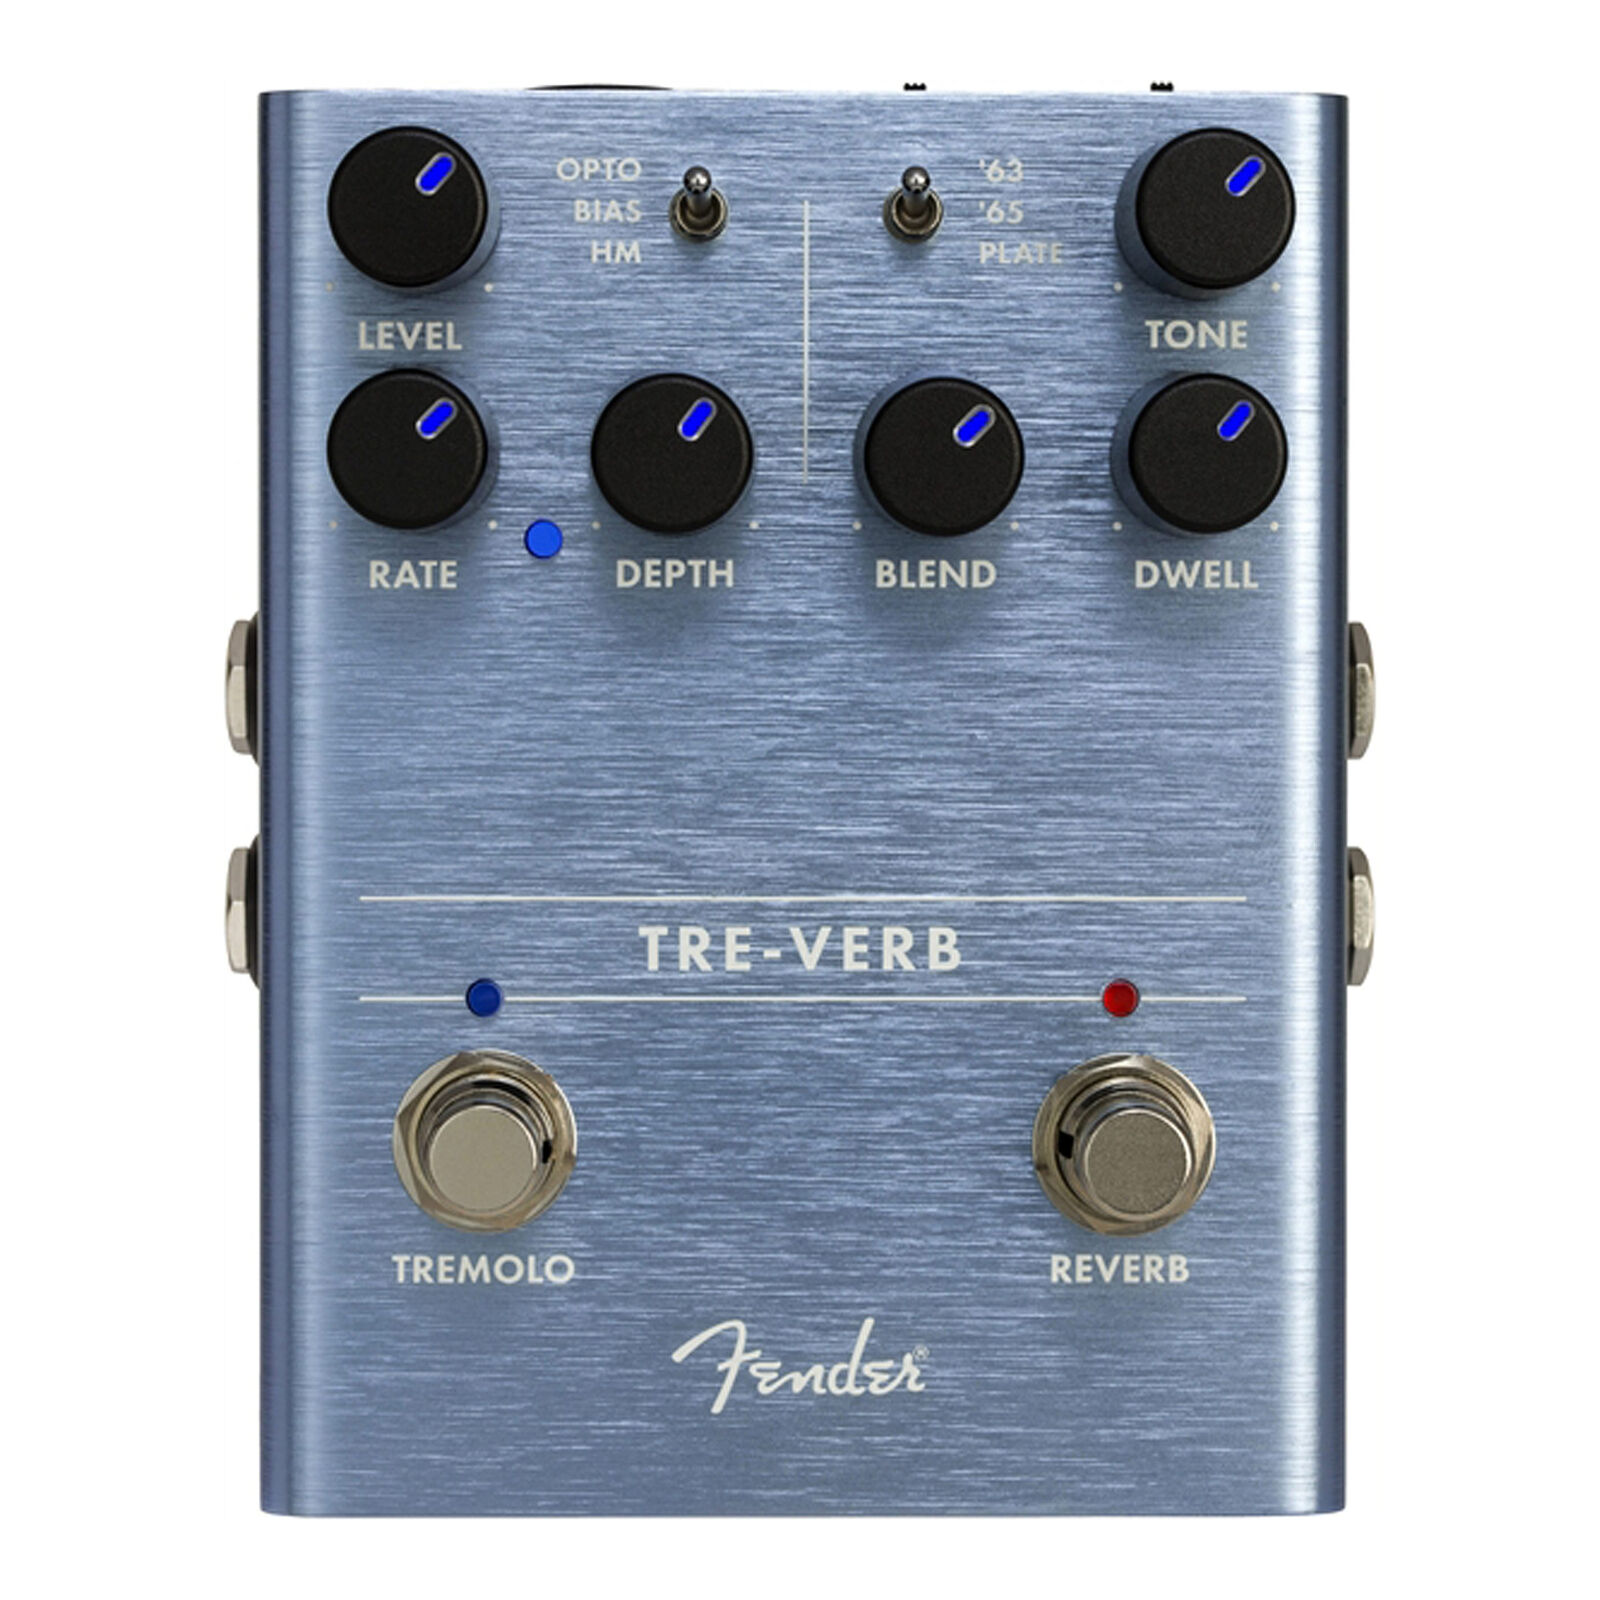 Fender Tre-verb Digital Reverb & Tremolo